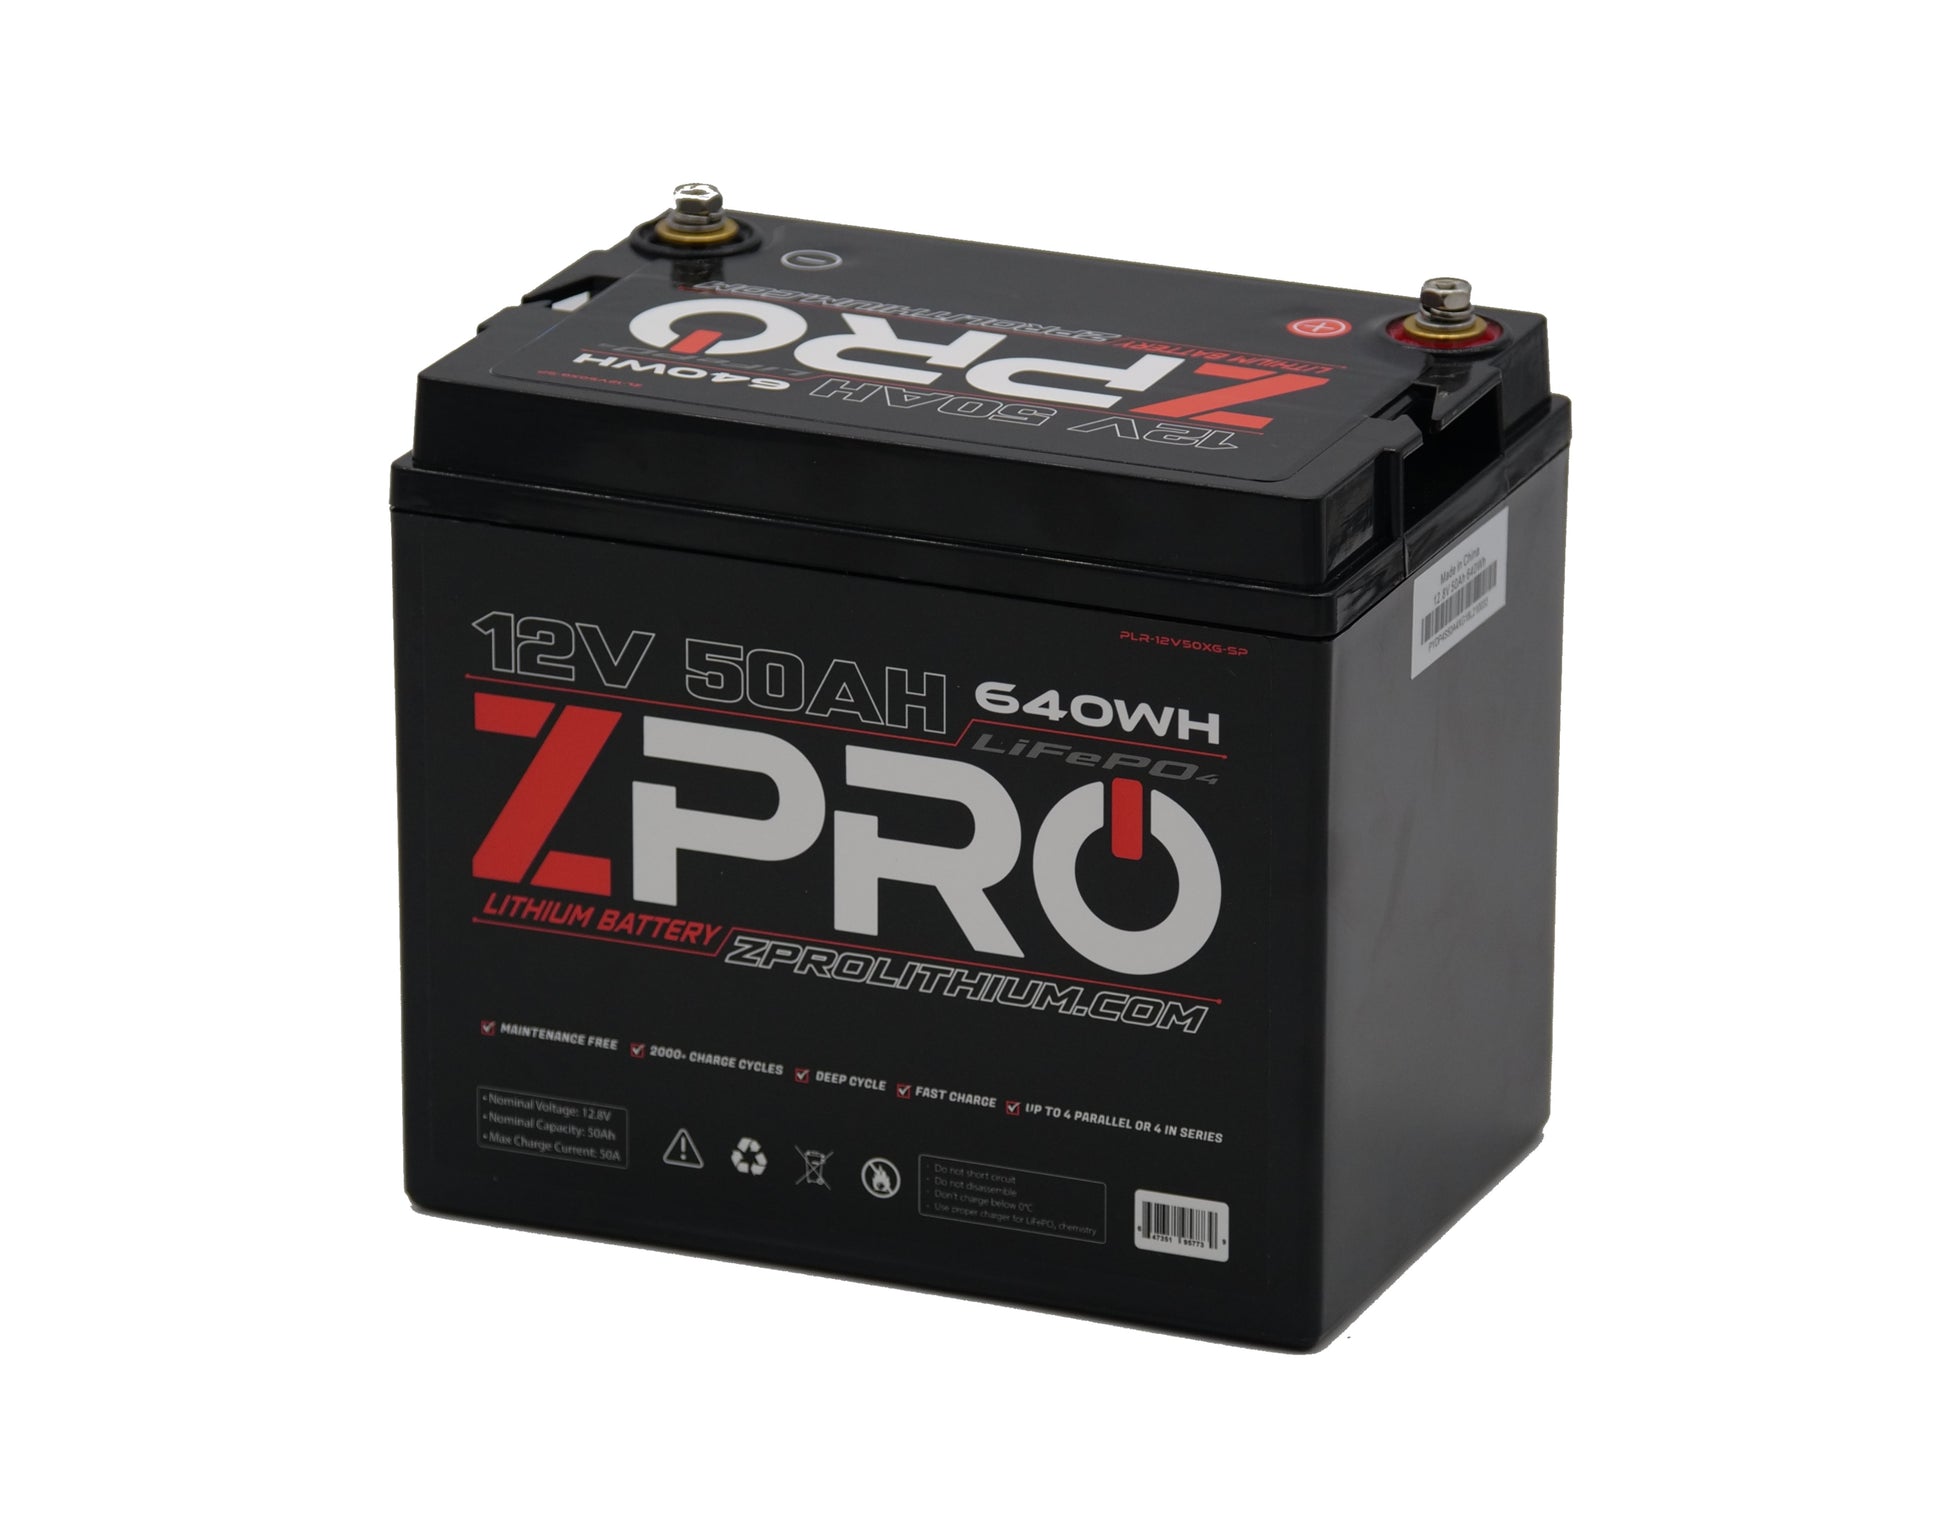 ZPRO Lithium 12V 50 Ah Battery